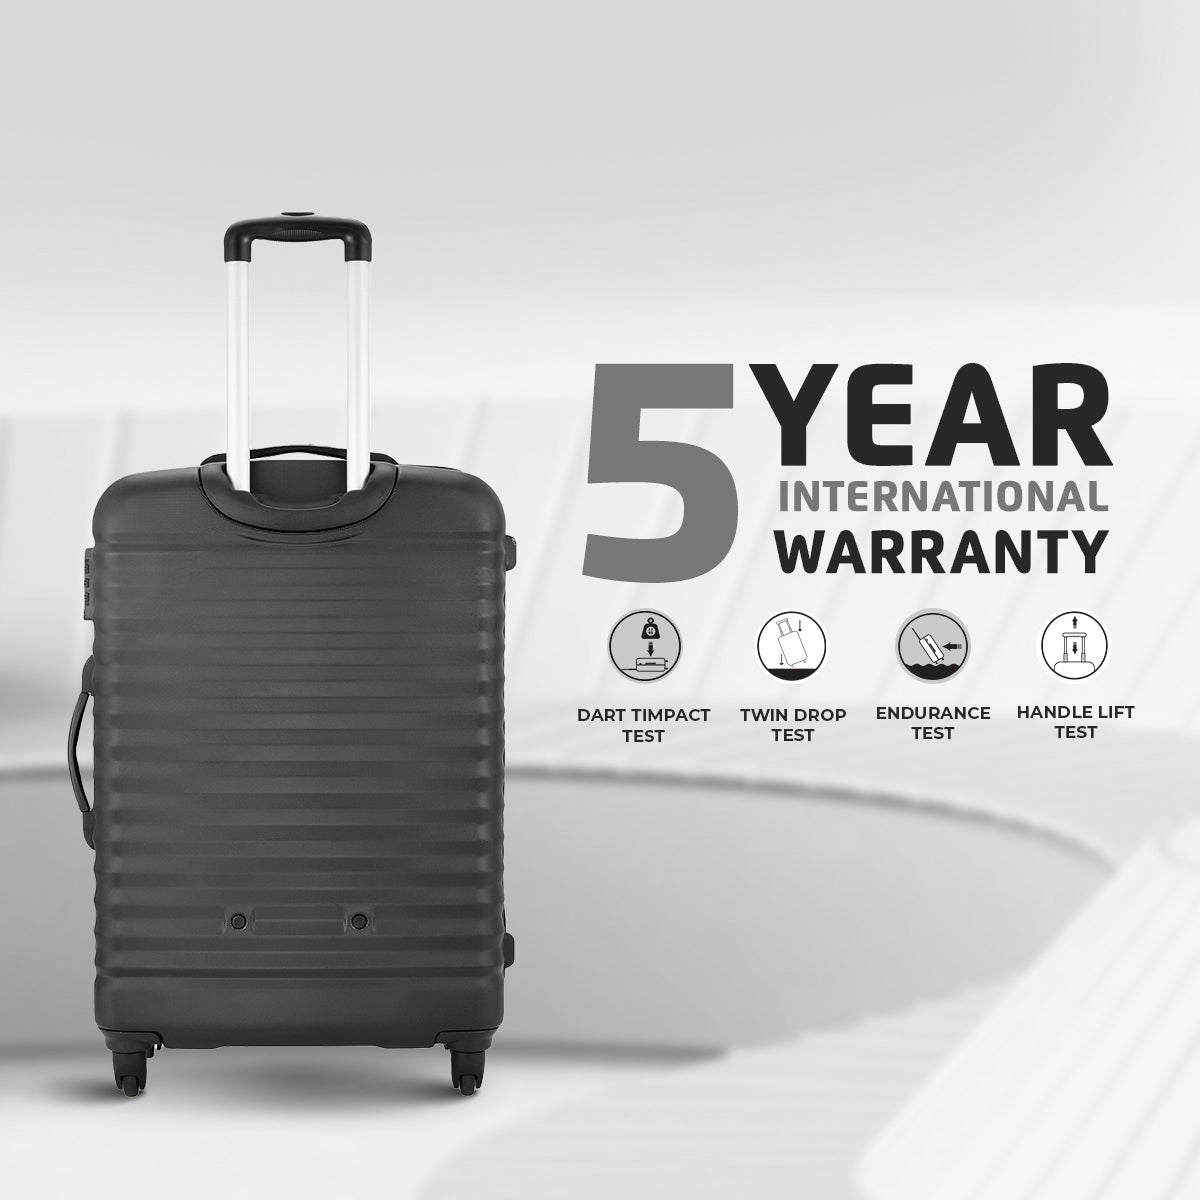 Safari Aerodyne Black Lightweight Trolley Bag with TSA Lock and Airline Compliant Sizing